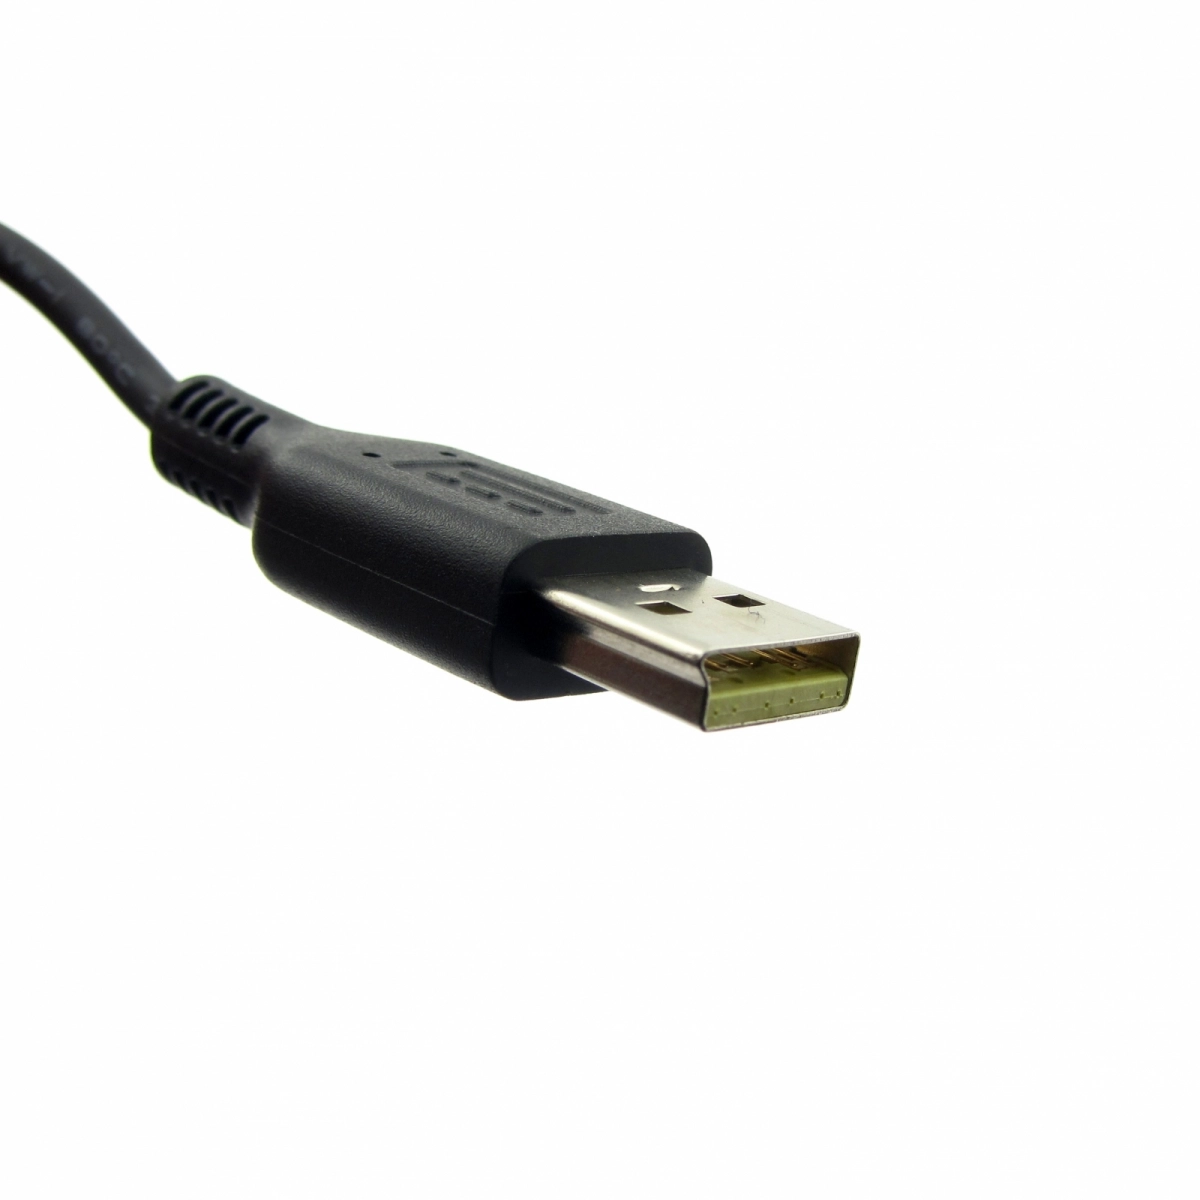 MTXtec Netzteil für LENOVO 36200565, 20/5.2V, 2A, Stecker USB